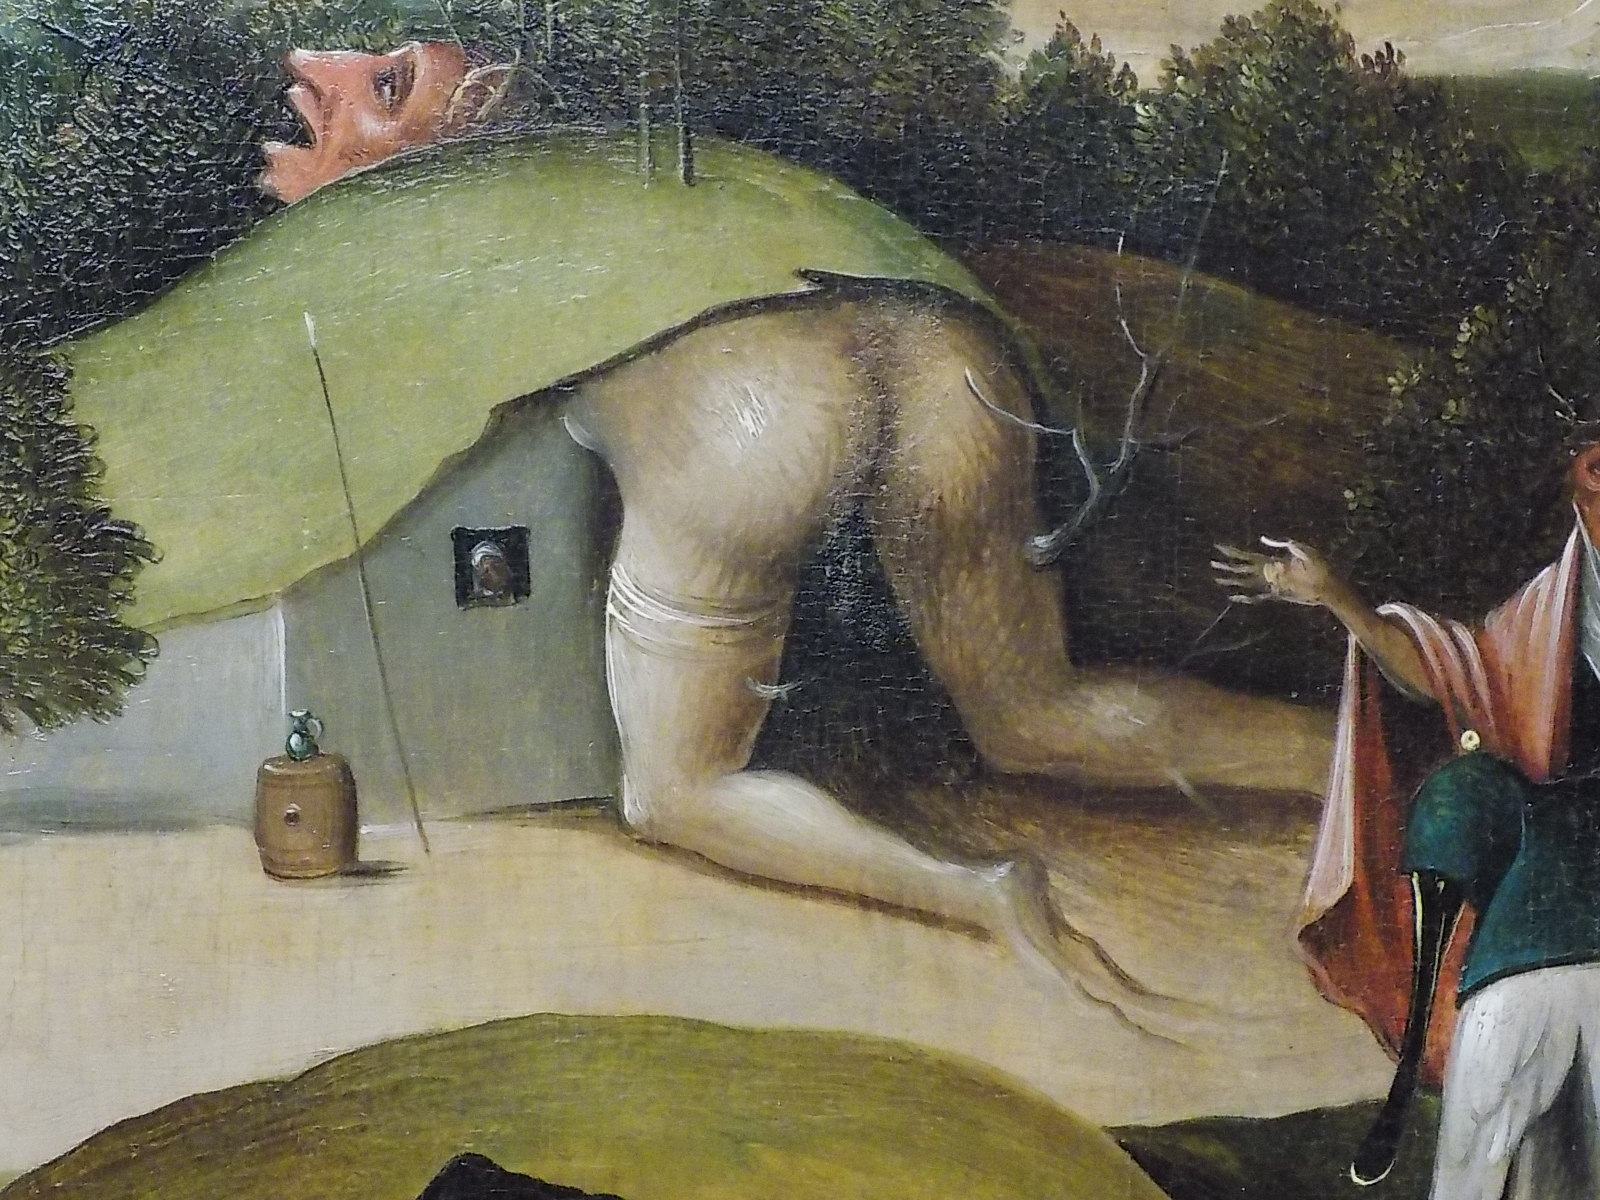 Detalhe de 'O Juízo Final', de Hieronymus Bosch